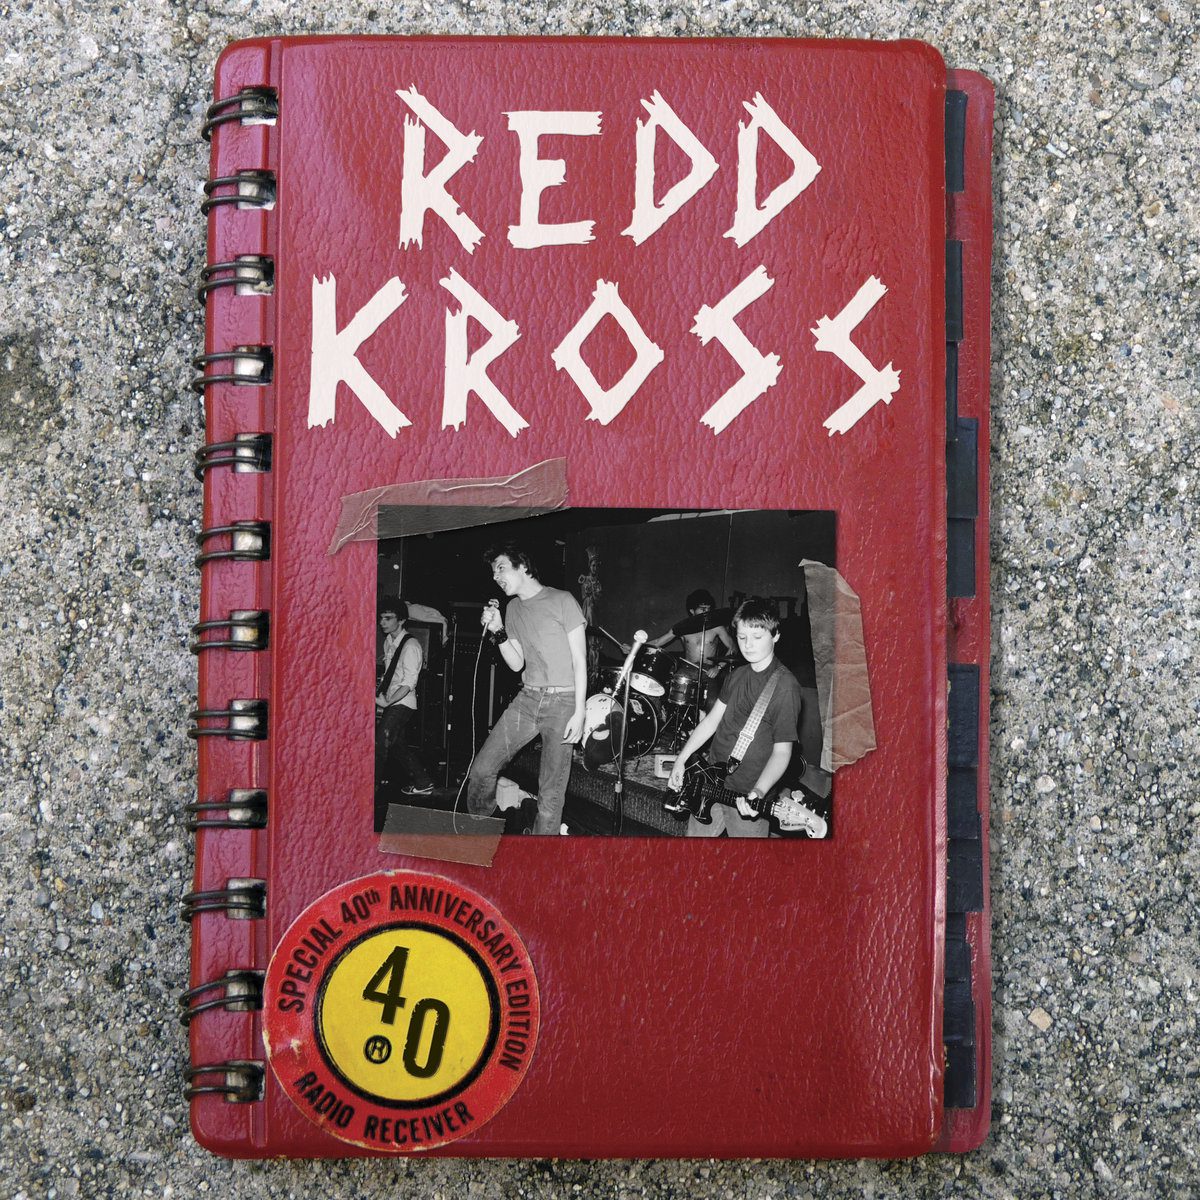 REDD KROSS – RED CROSS (1980) (ED. 40º ANIVERSARIO (2020))